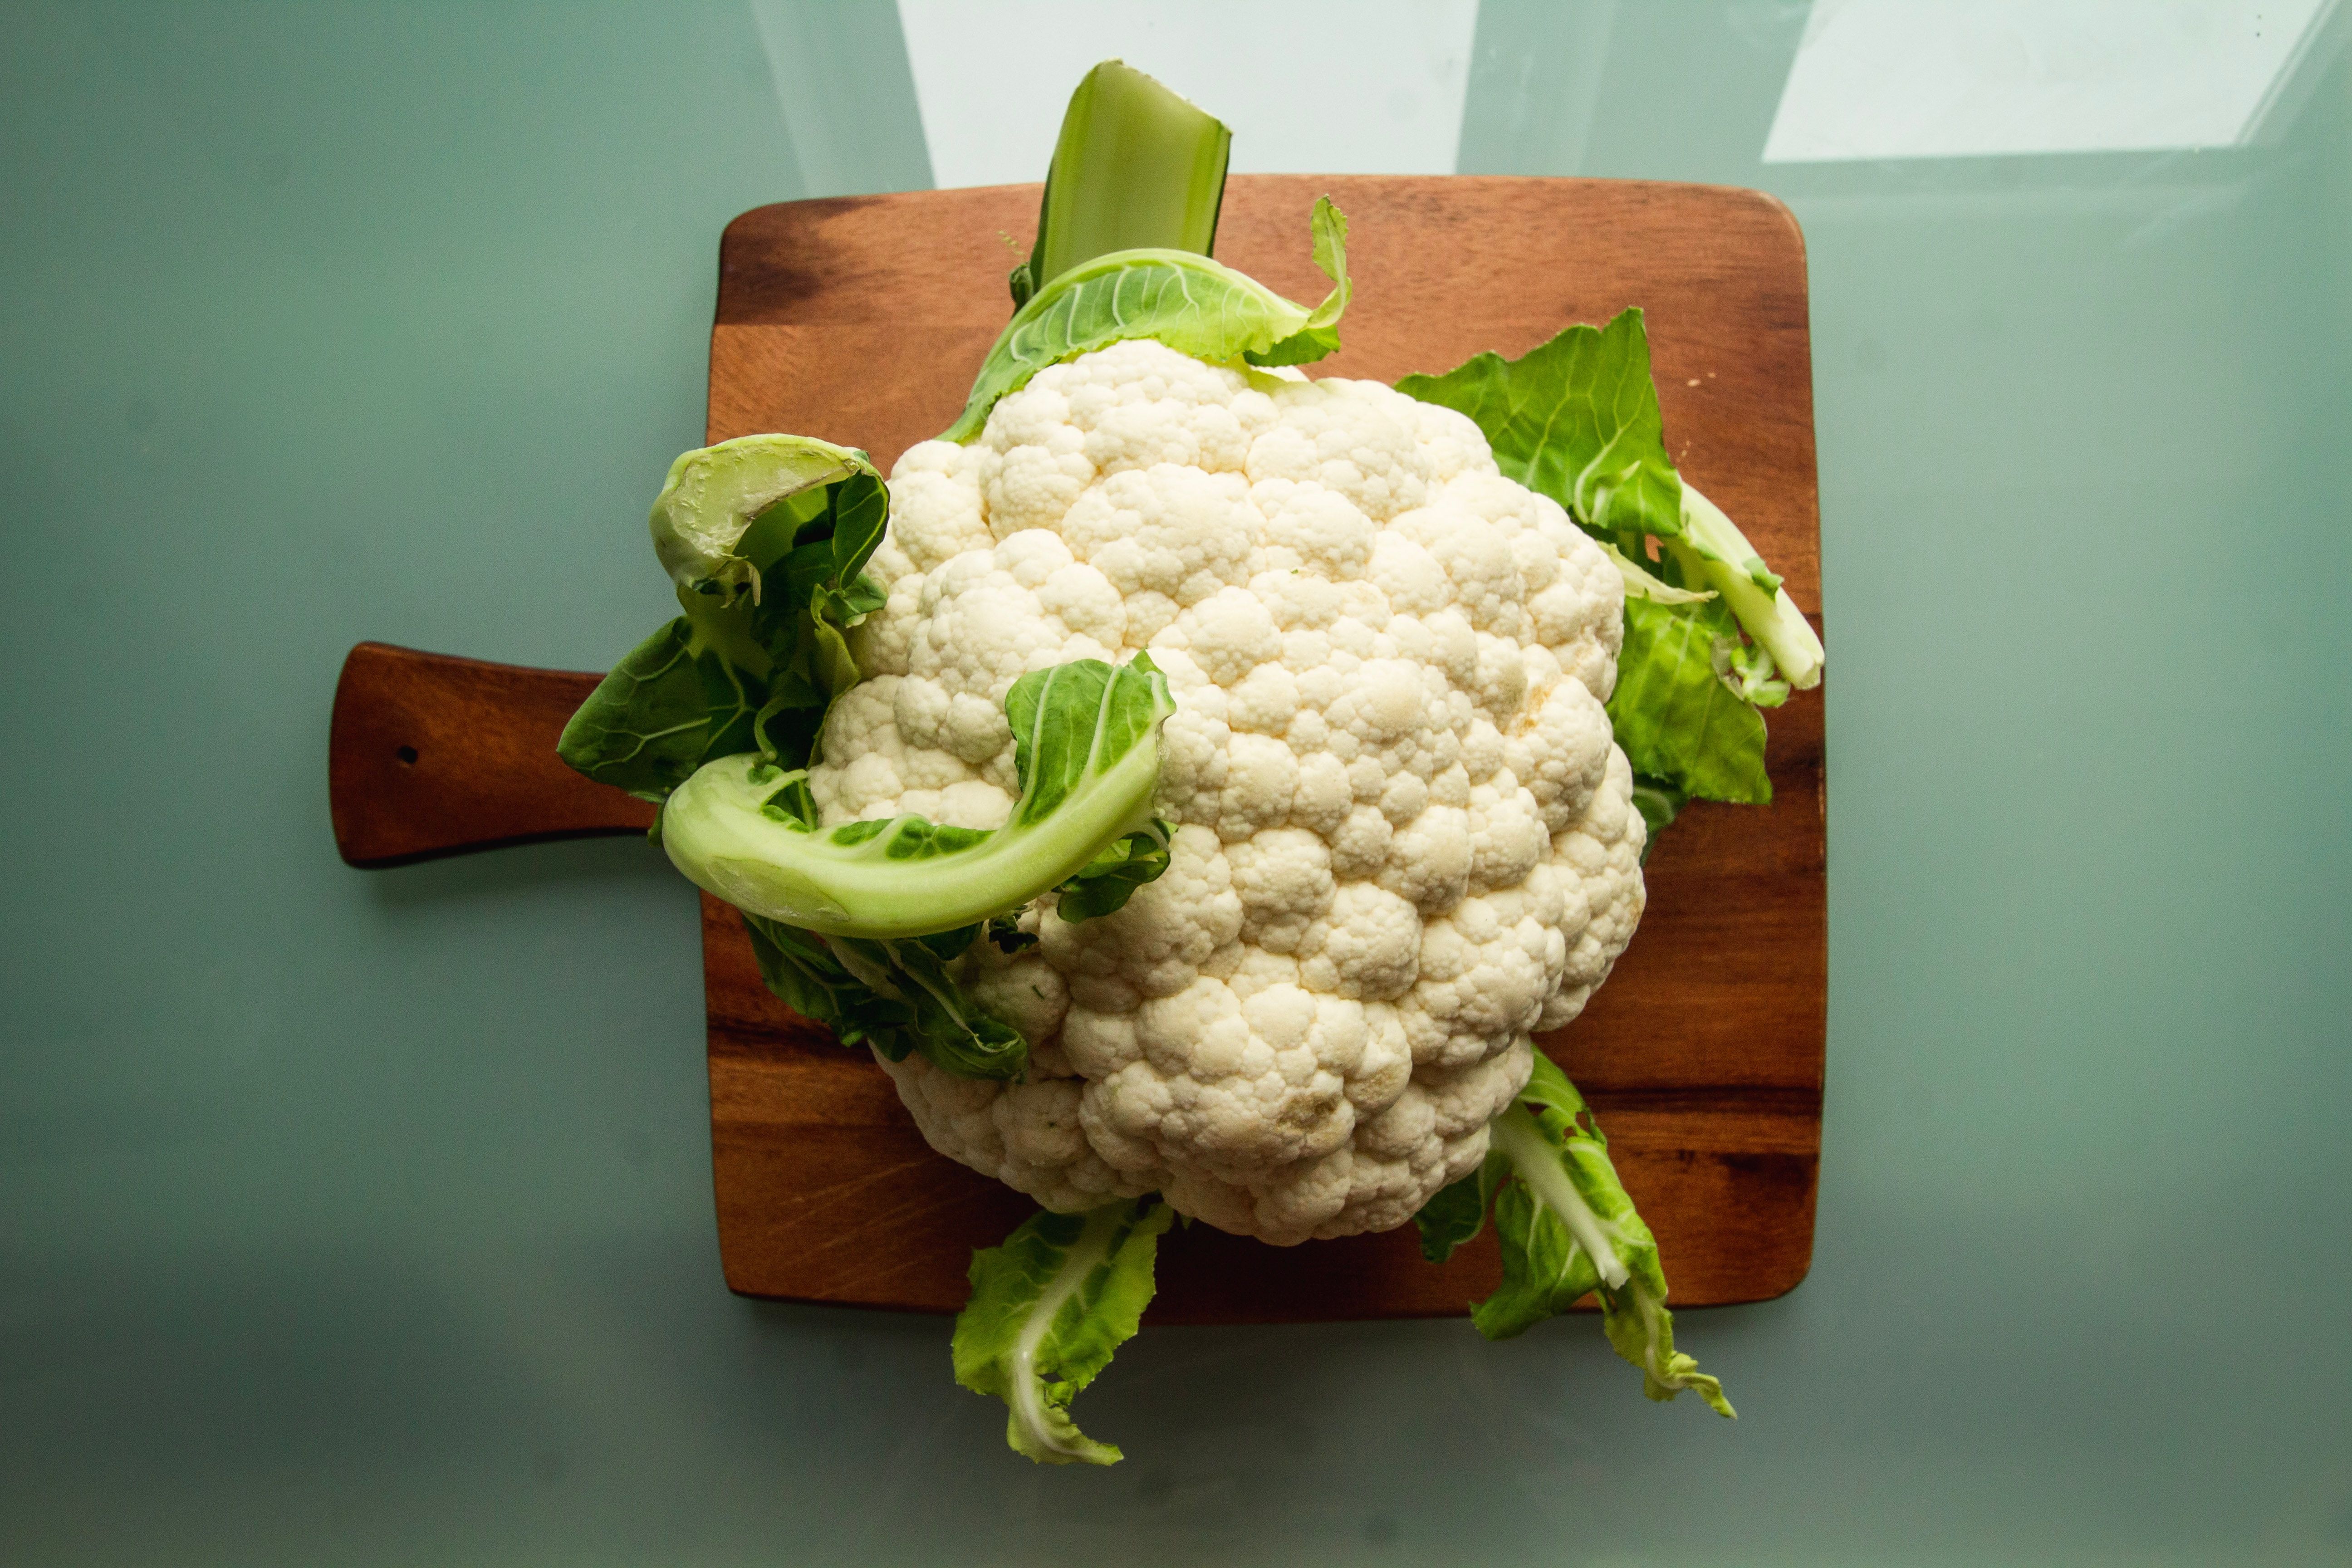 What good is a Cauliflower?